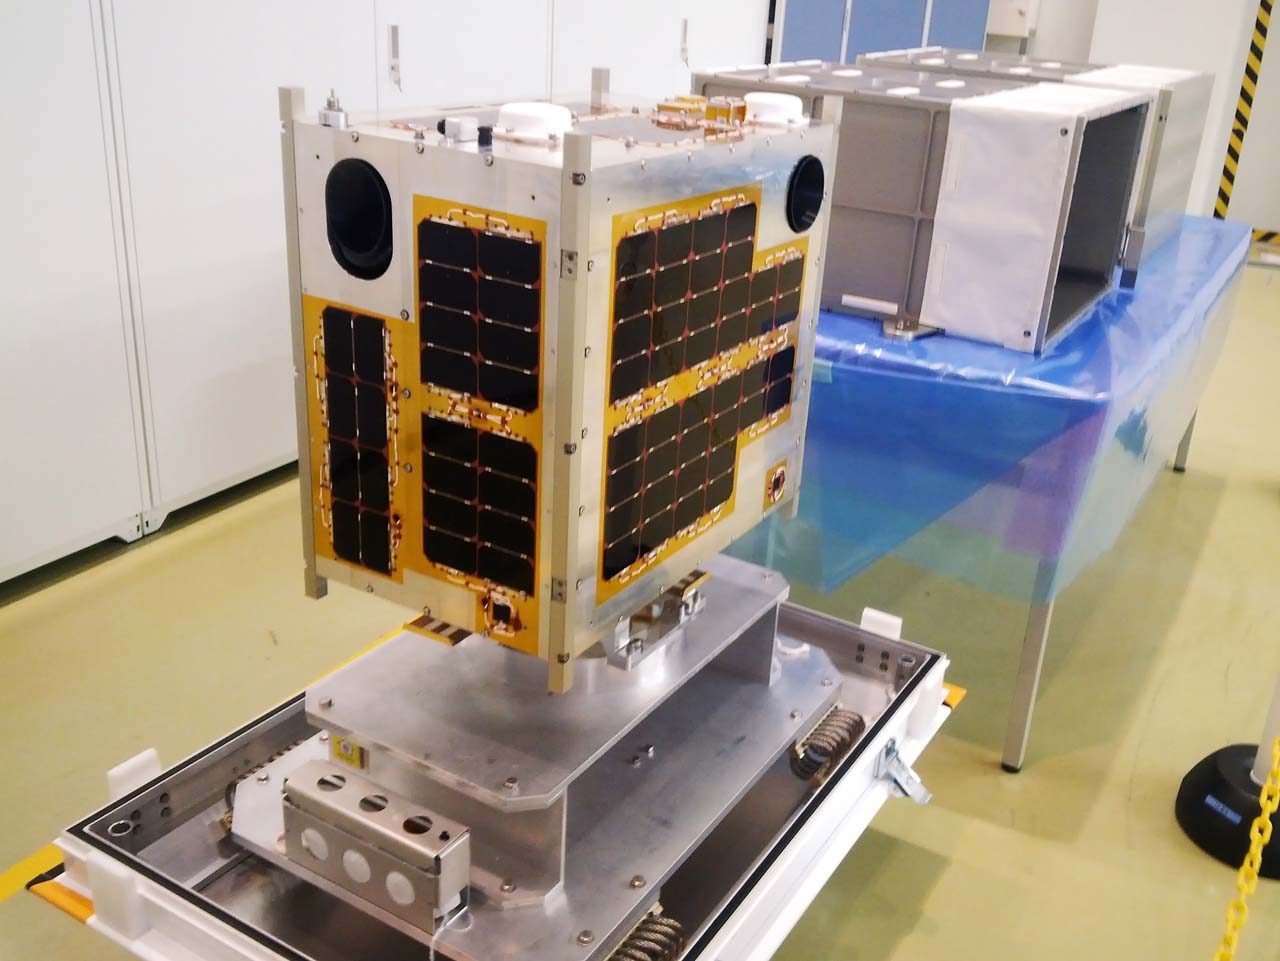 How Diwata-2 is better than PH’s first satellite, Diwata-1